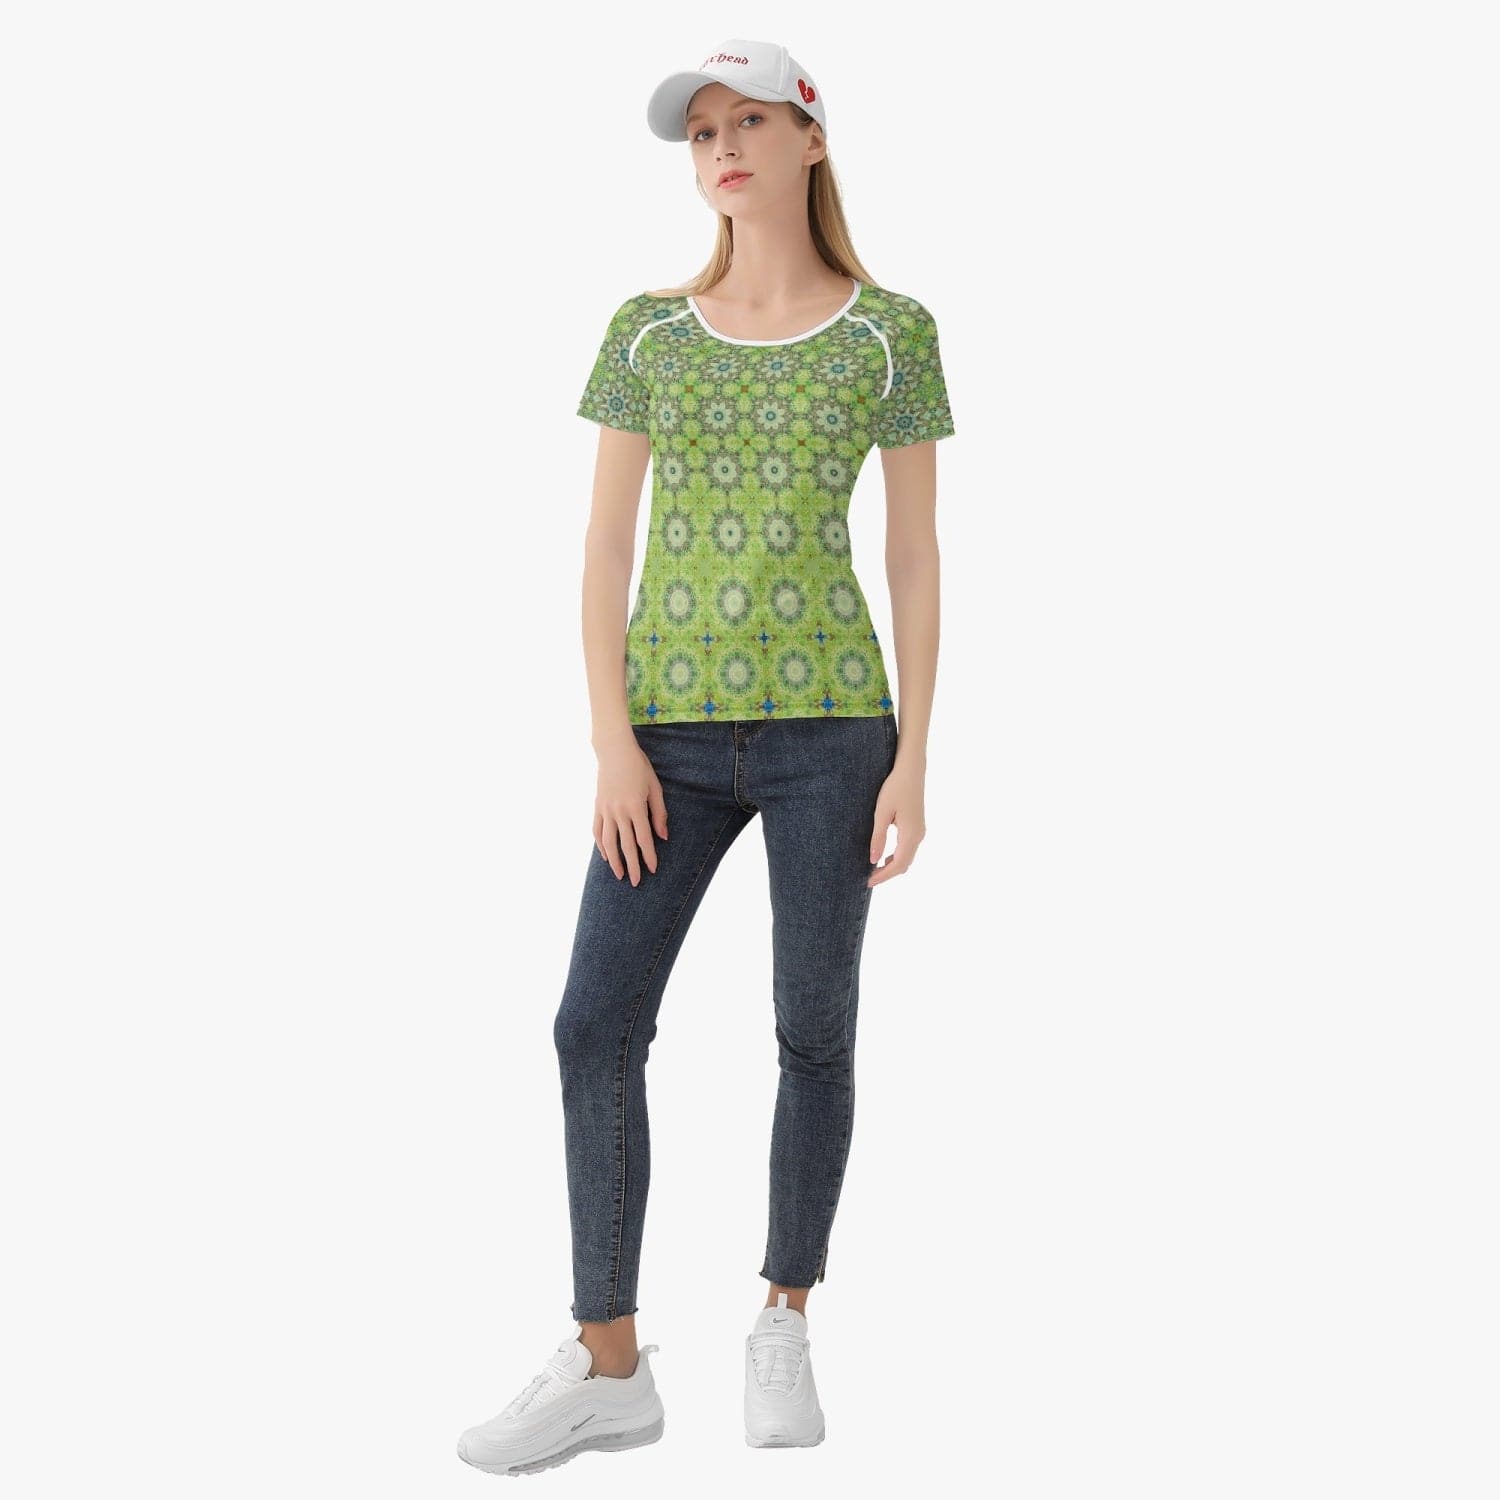 Green Spring trendy 2022  Handmade Women sports/yoga T-shirt, by Sensus Studio Design